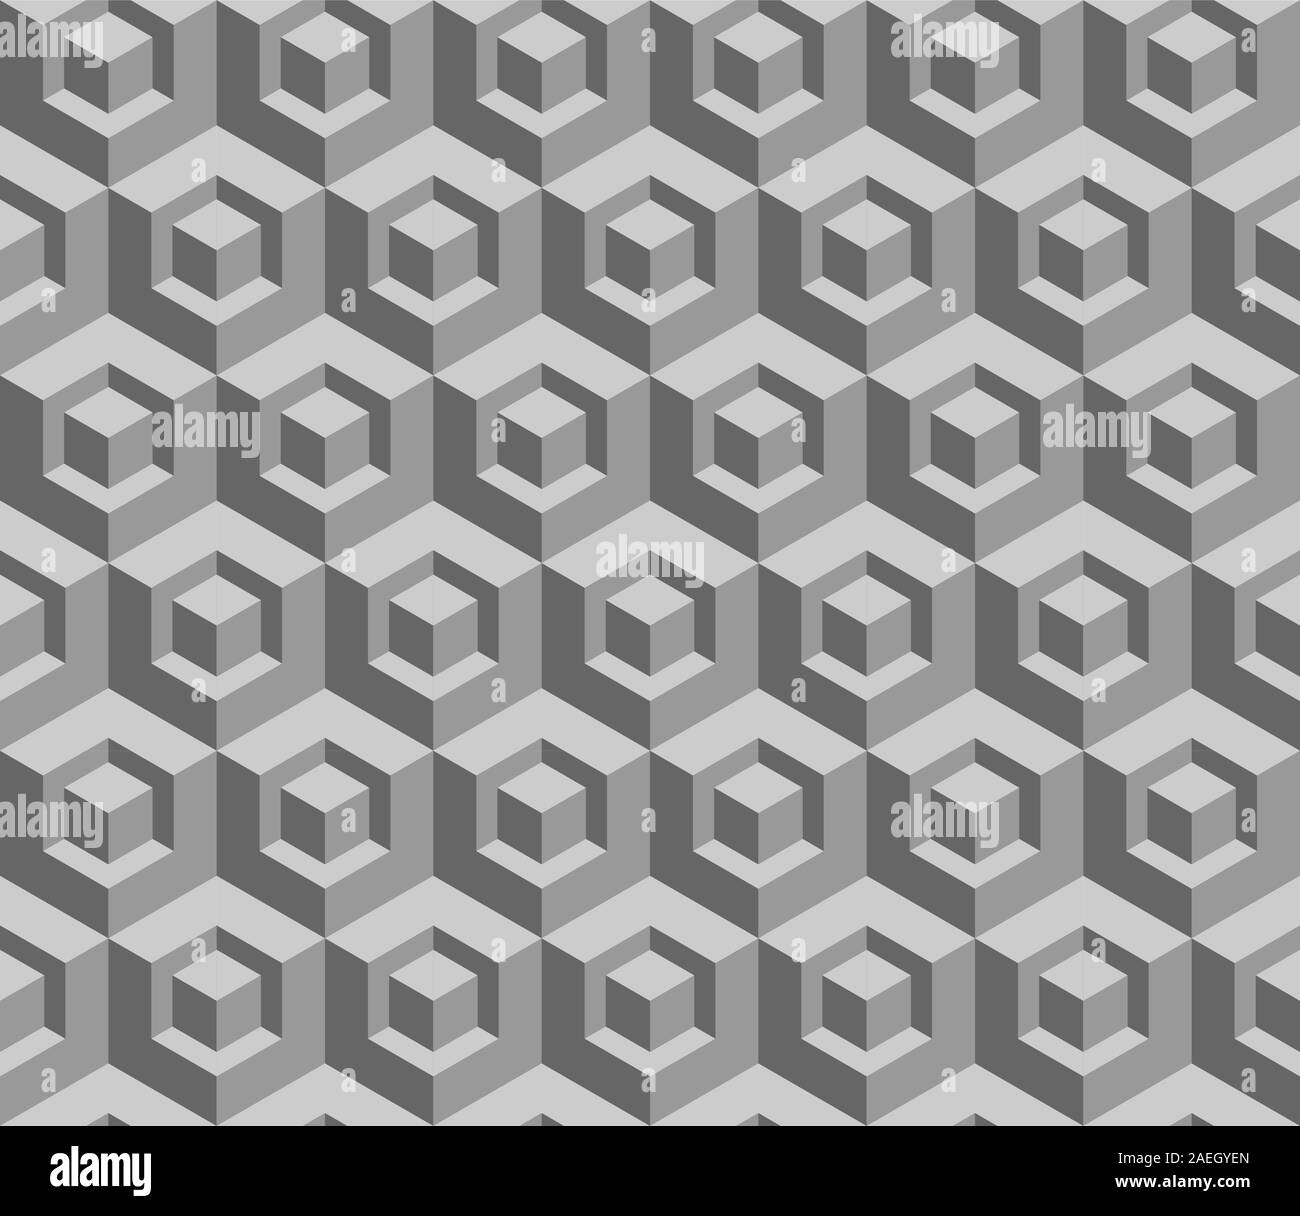 3d geometric patterns wallpaper